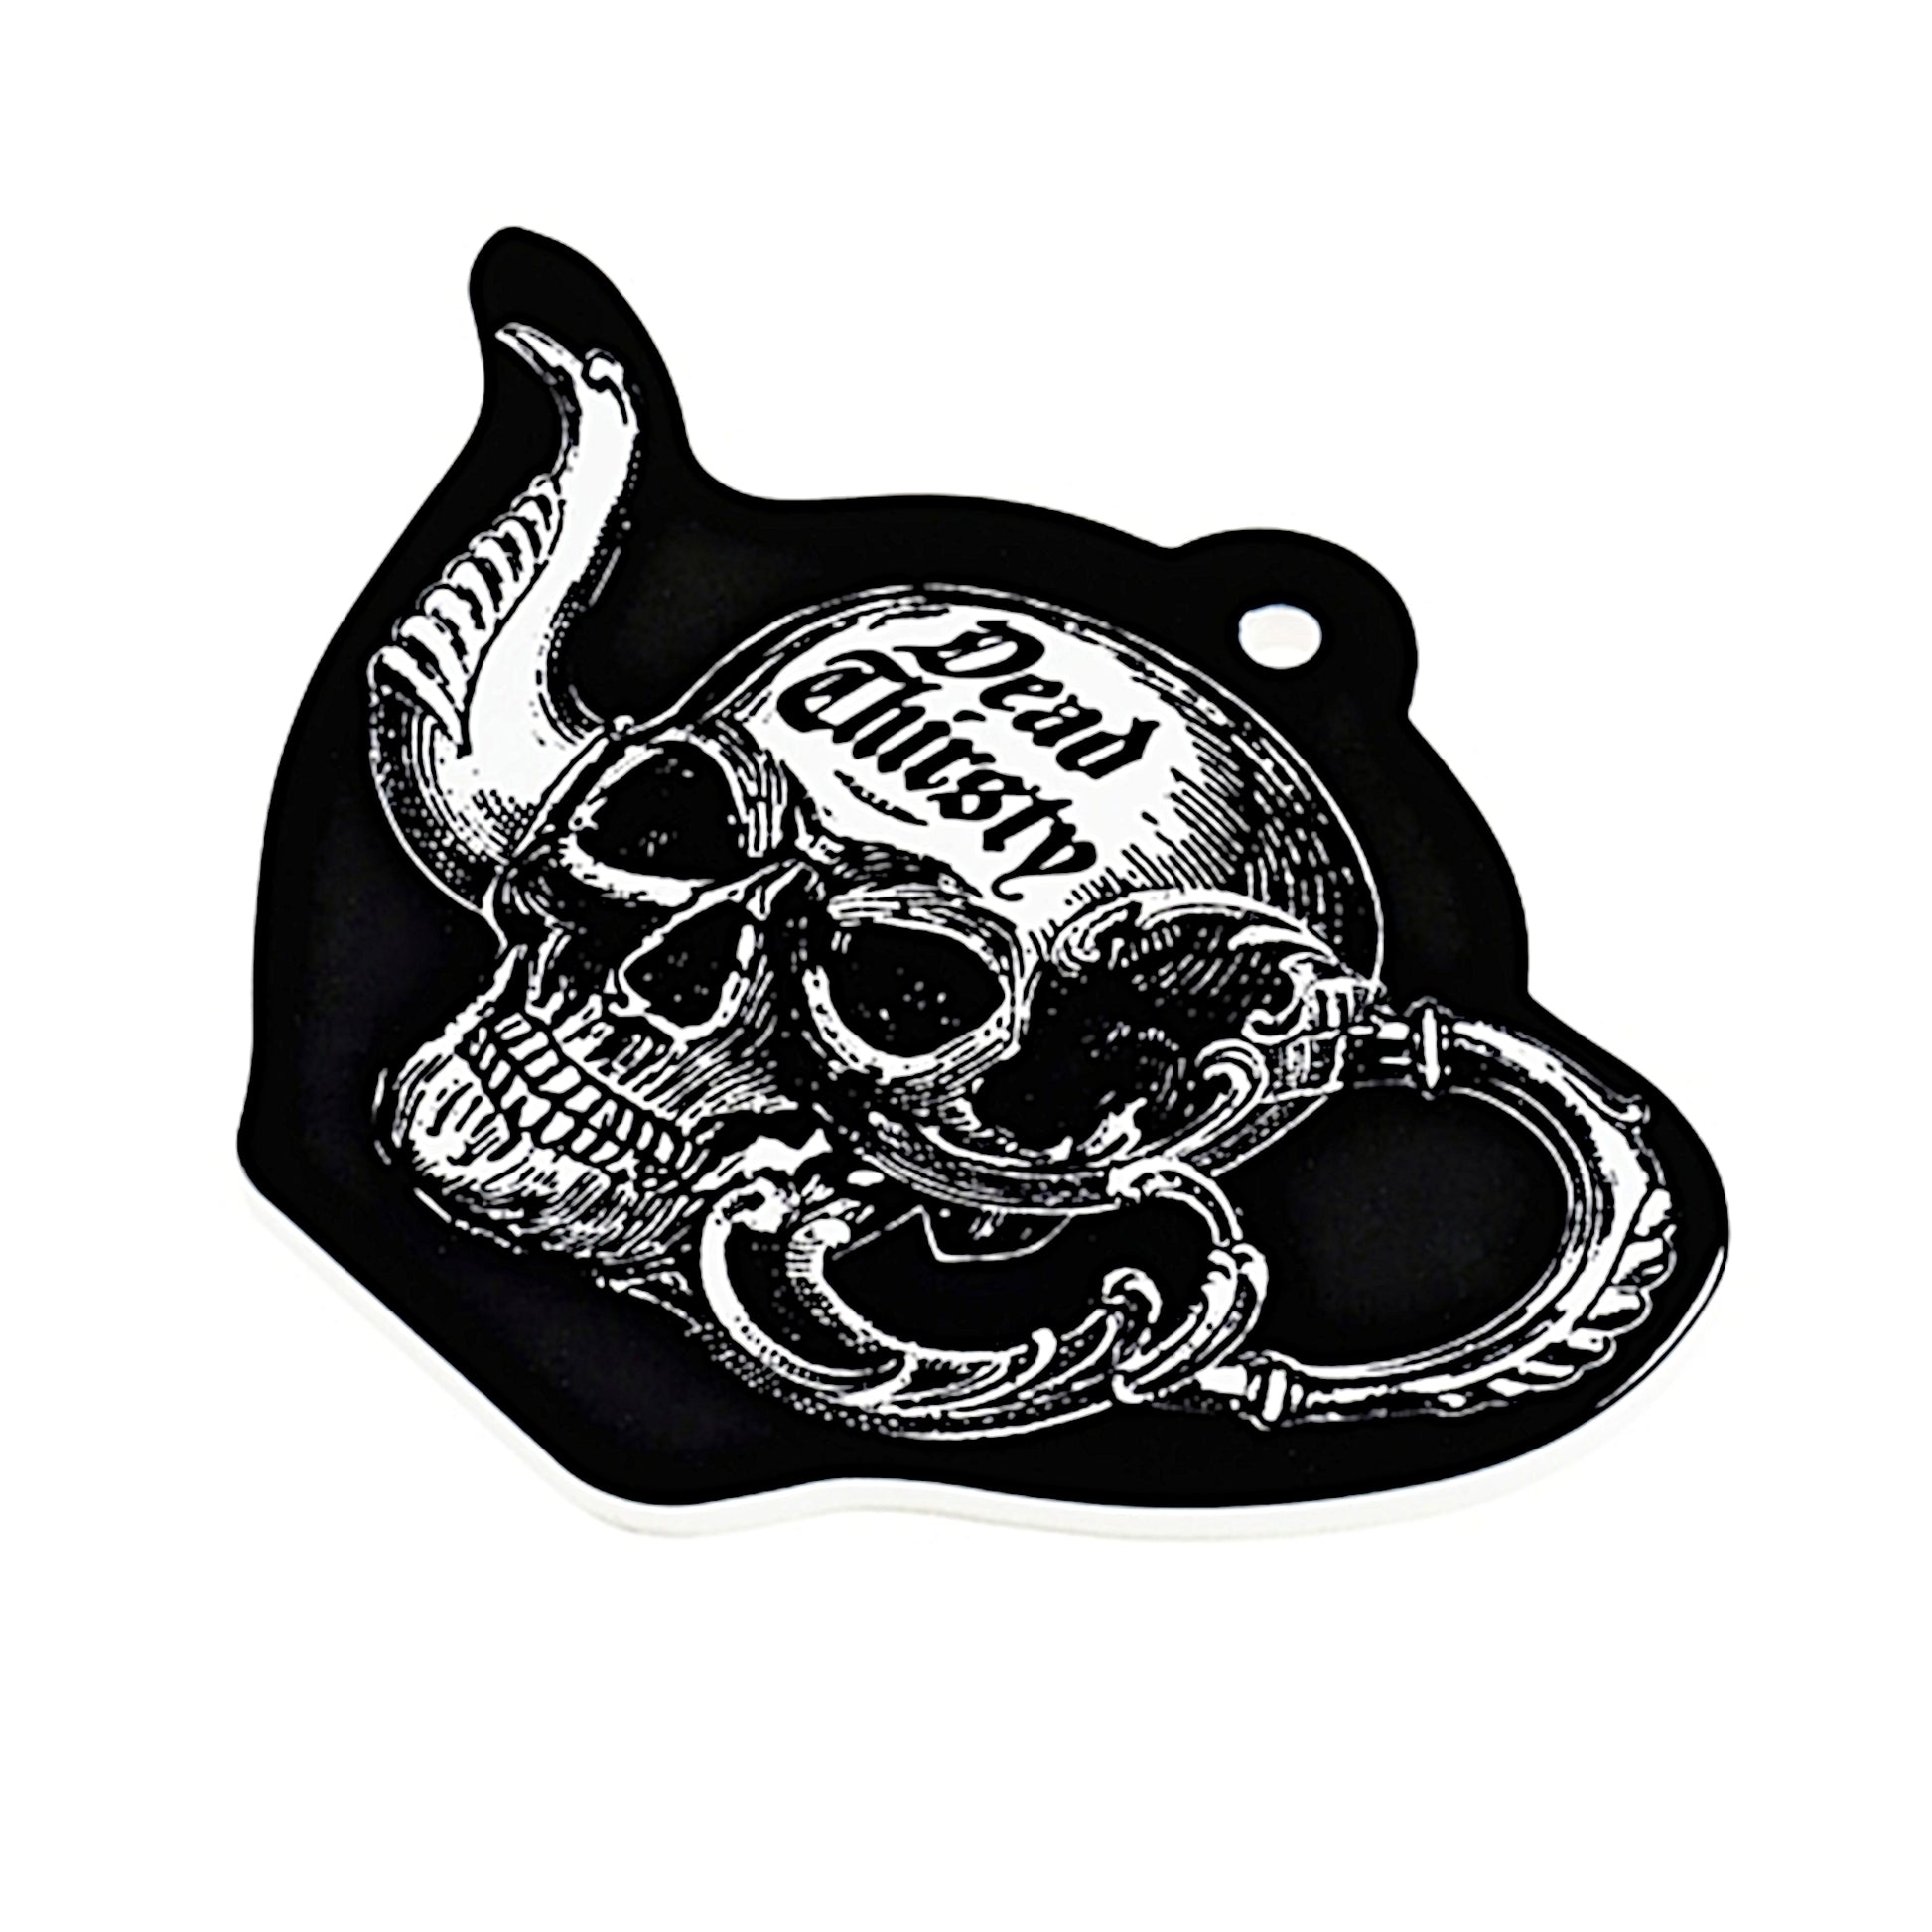 Dead Thirsty Trivet | Teapot Shaped Skull Design Coaster - Alchemy Gothic - Trivets